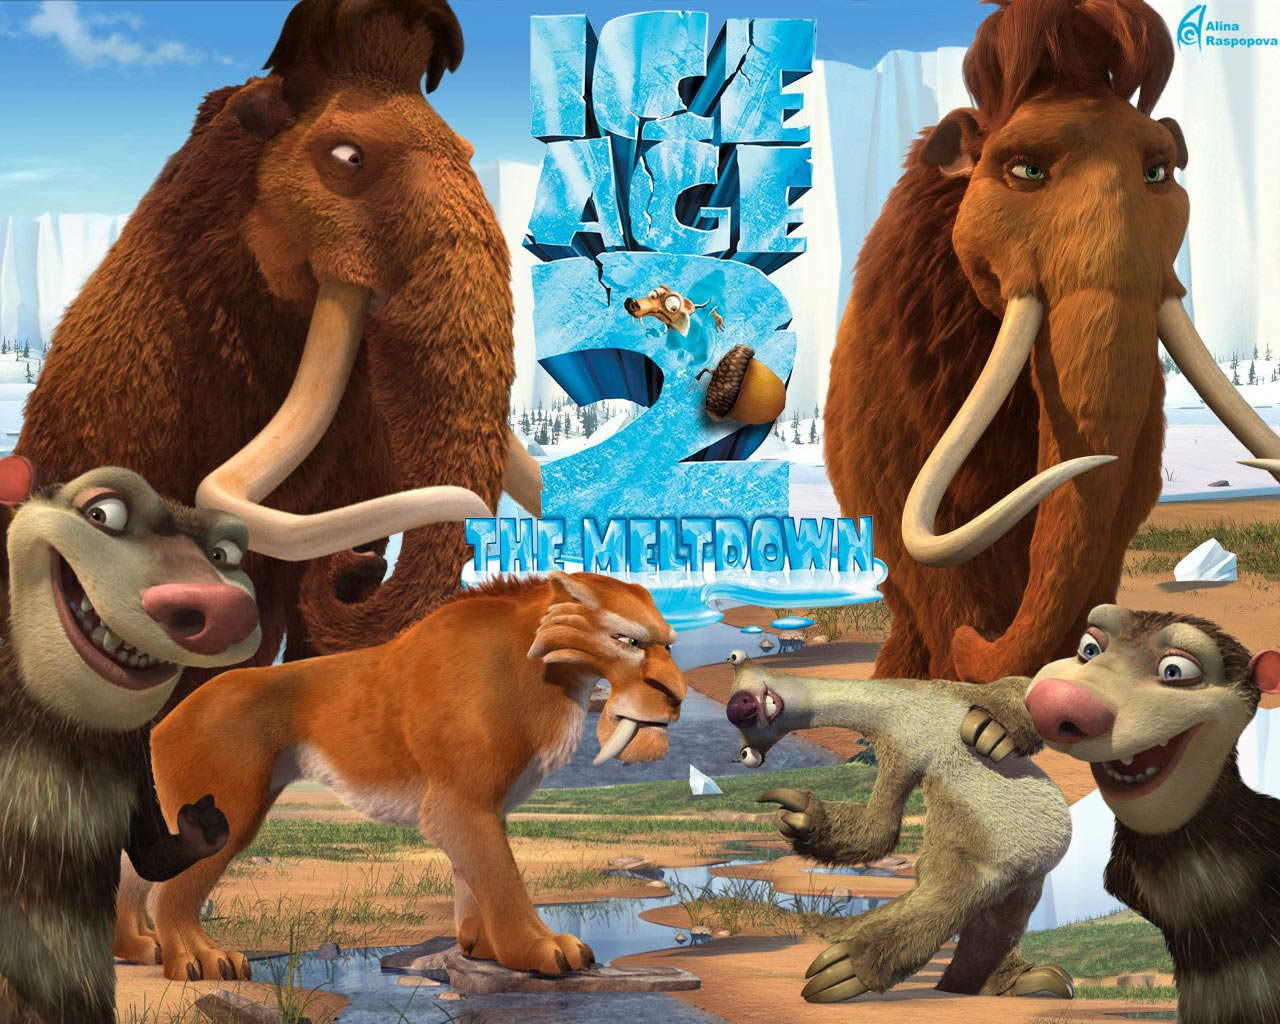 Ice Age movie